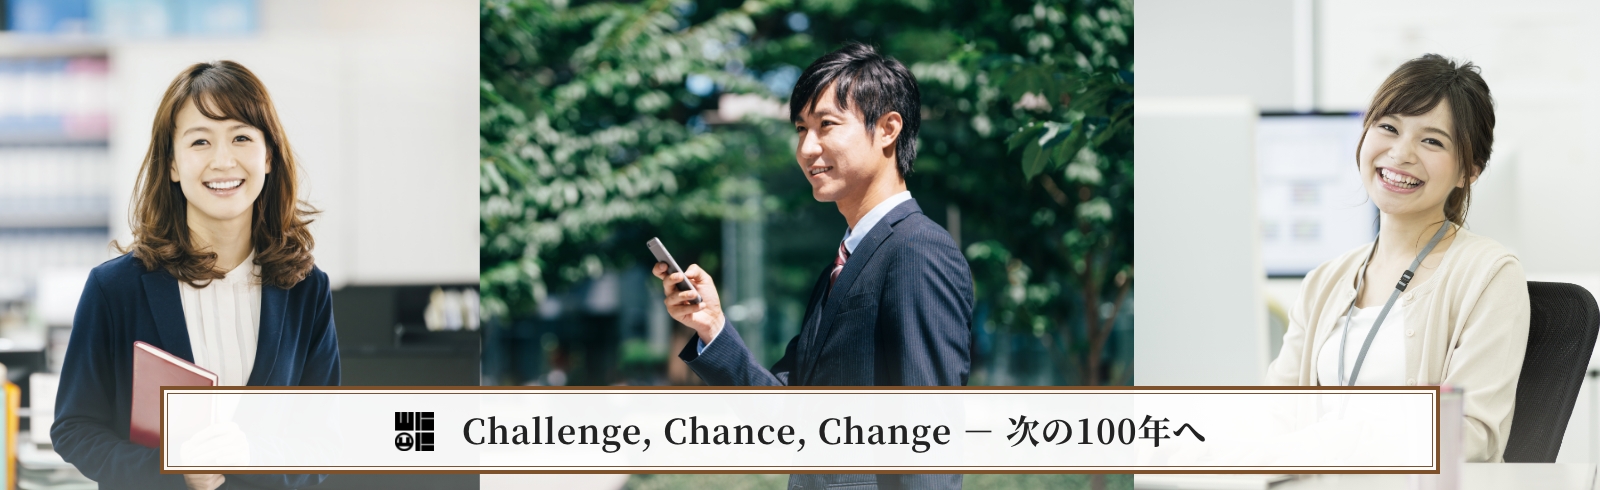 Challenge, Chance, Change - 次の100年へ